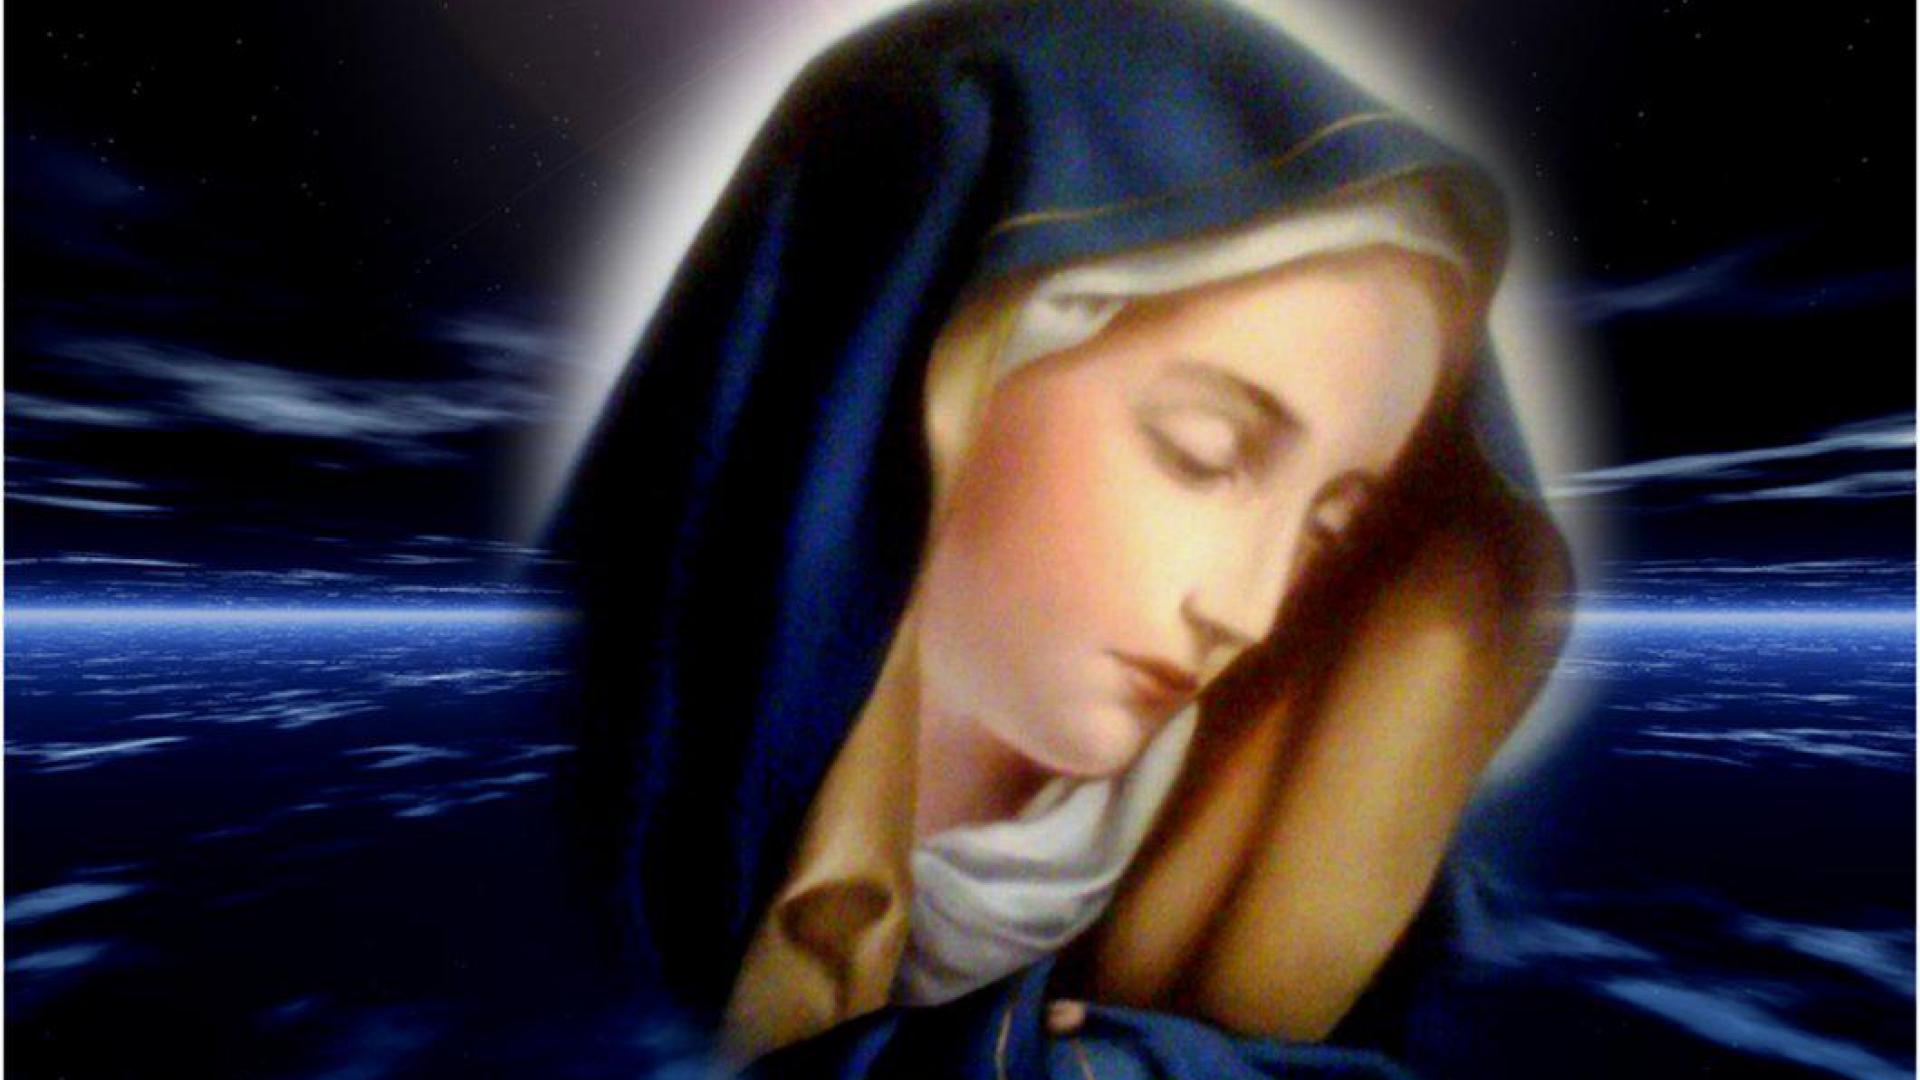 Virgin Mary Backgrounds - Virgin Mary 1 Hd - HD Wallpaper 